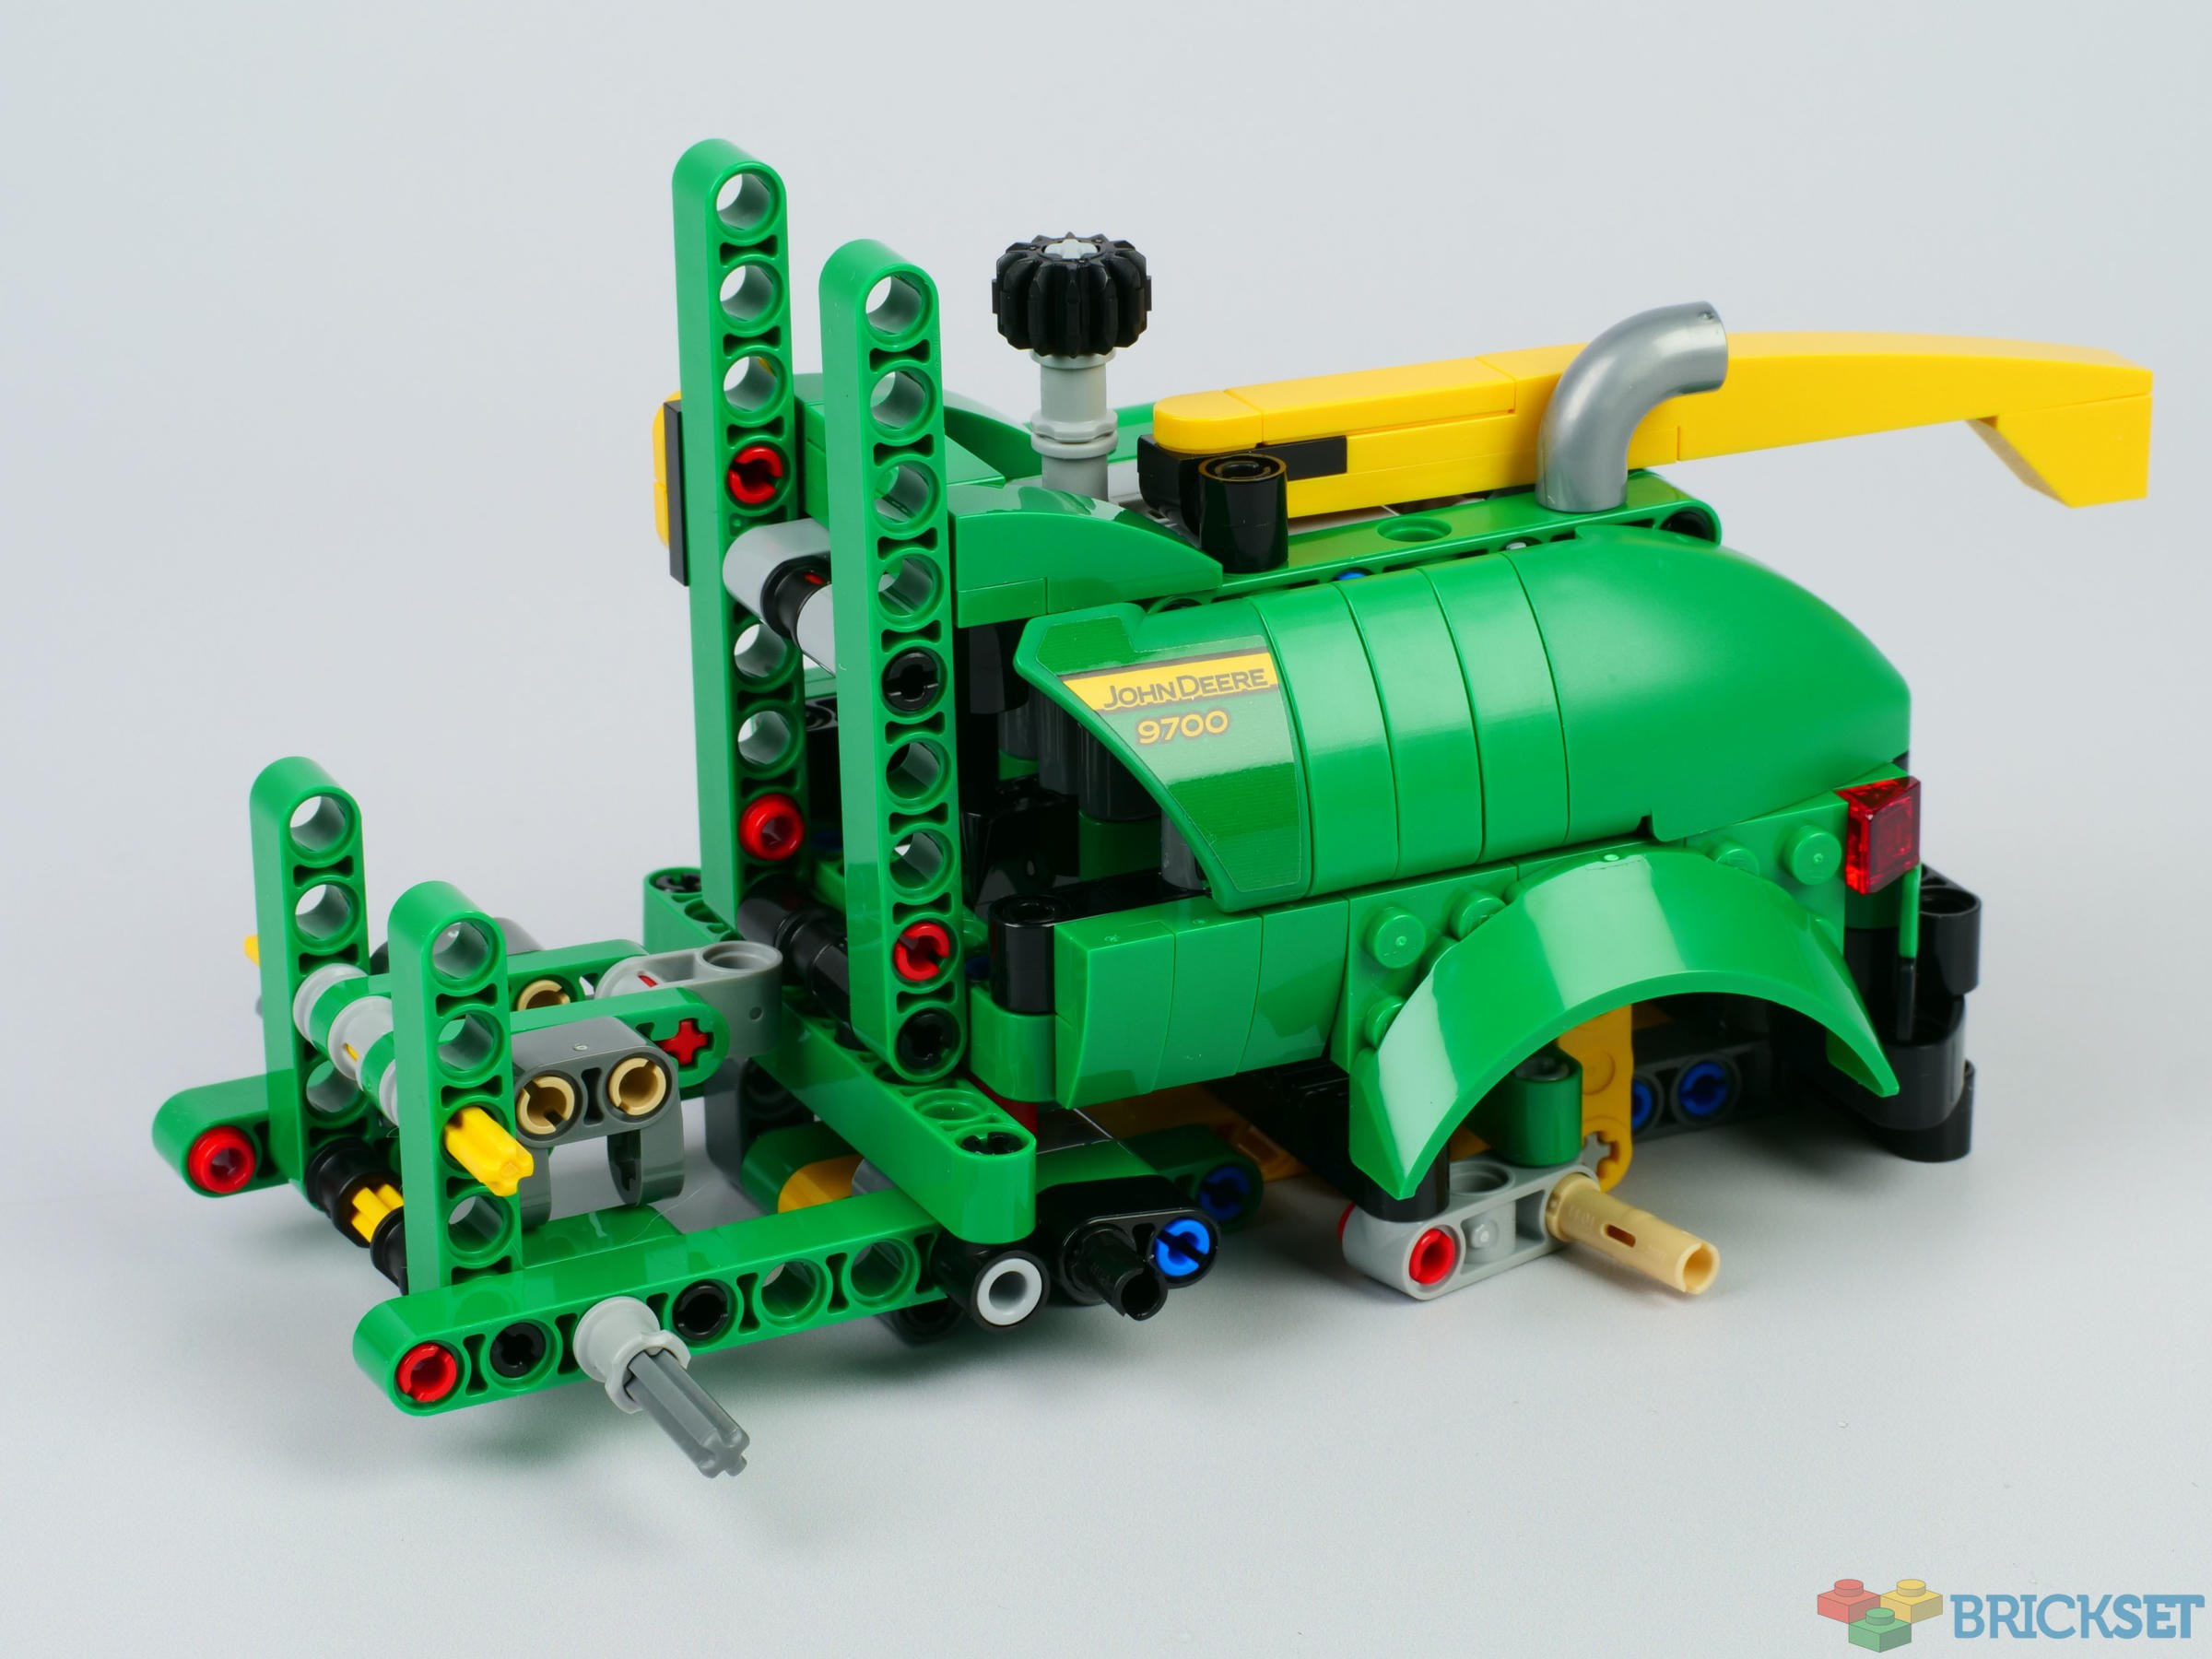 John deere 9700 Forage Harvester Lego Technic 42168 - La Grande Récré